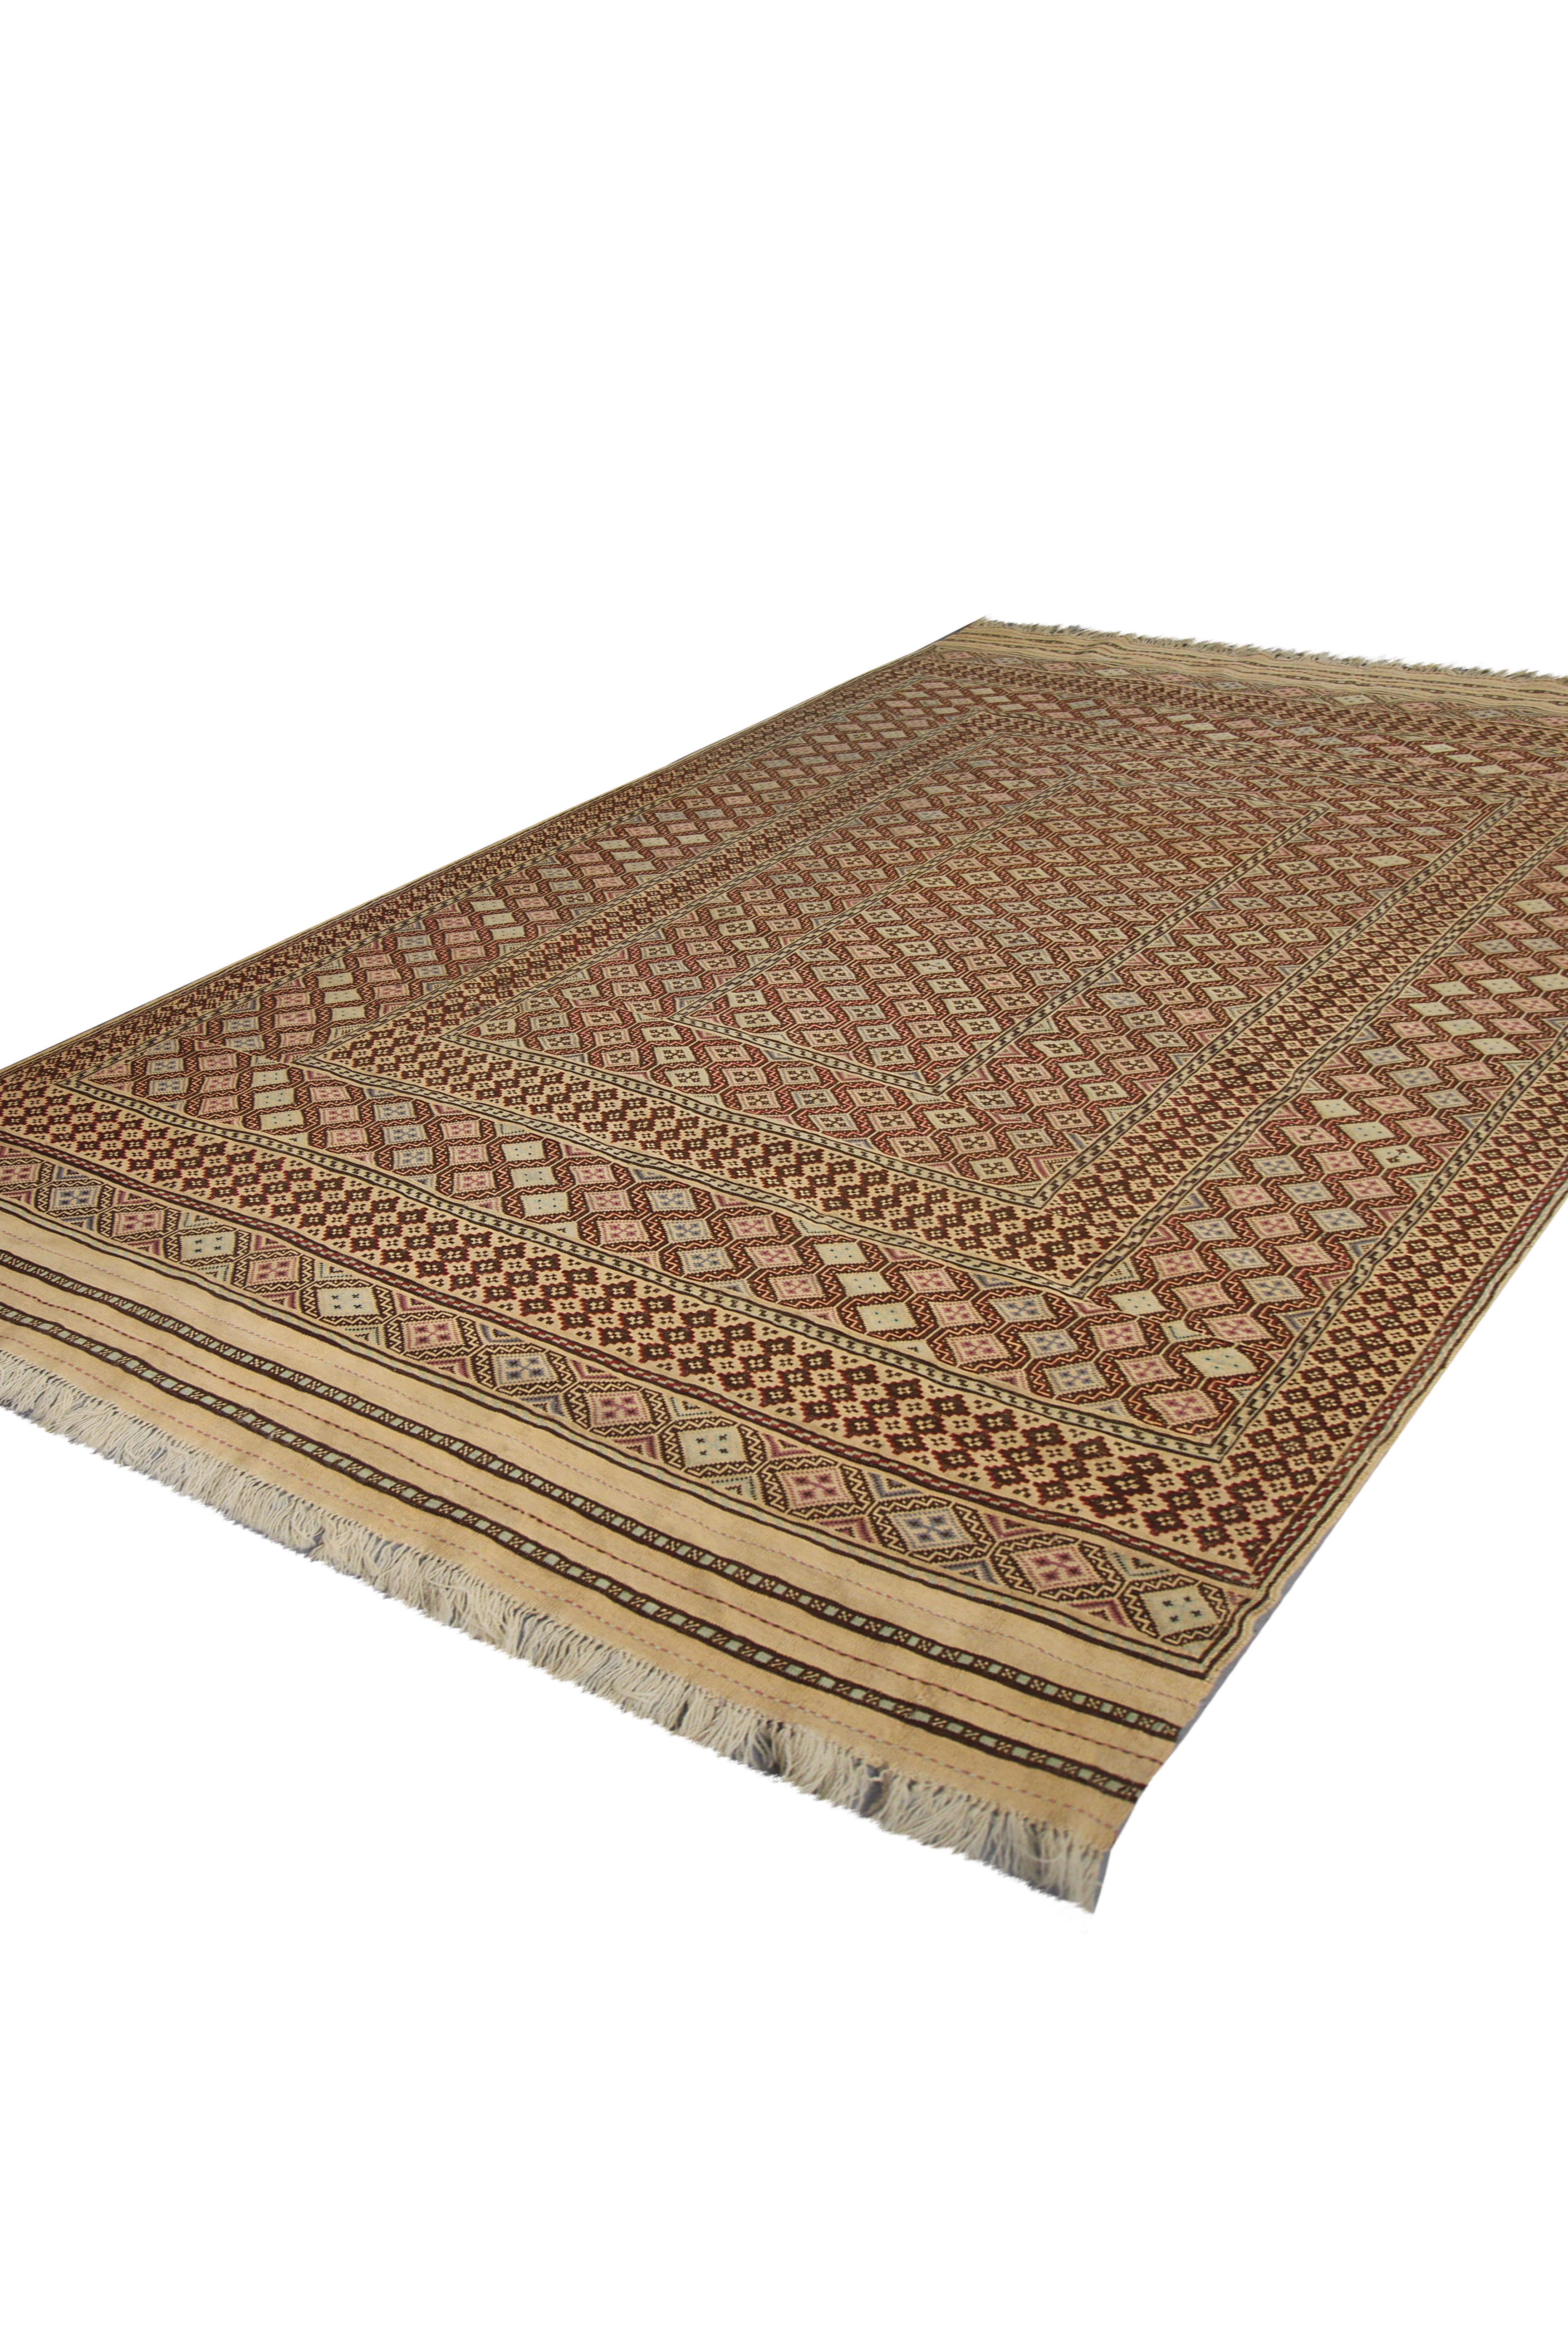 Afghan Old Brown Sumak Rug Handmade Flat Woven Oriental Antique Area Rug For Sale